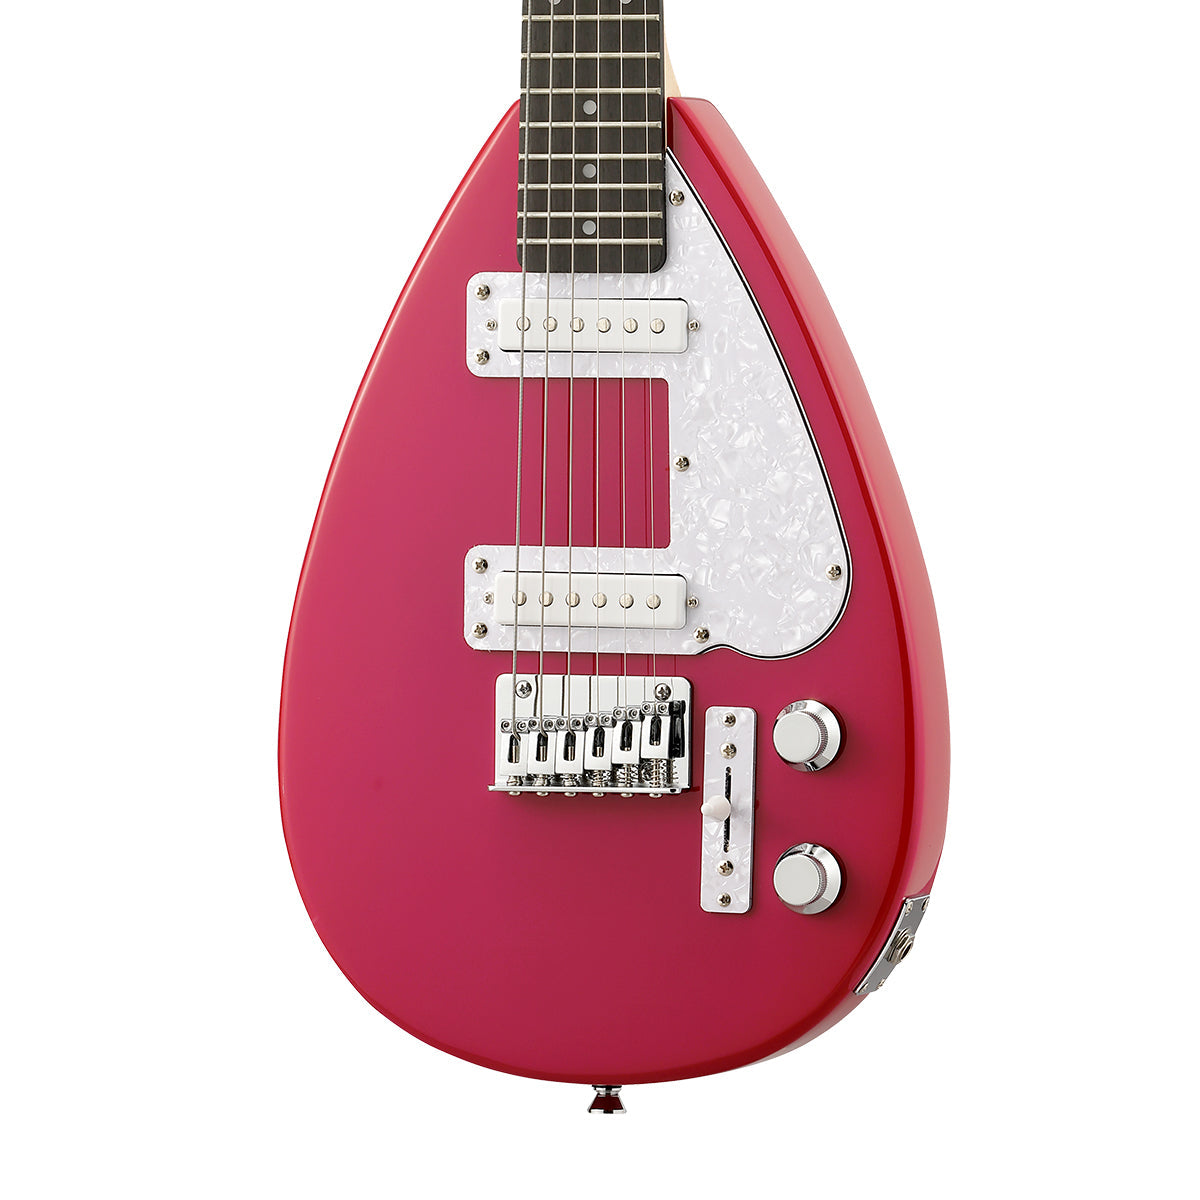 Mark III Mini Guitar - Loud Red Vox Amp Shop